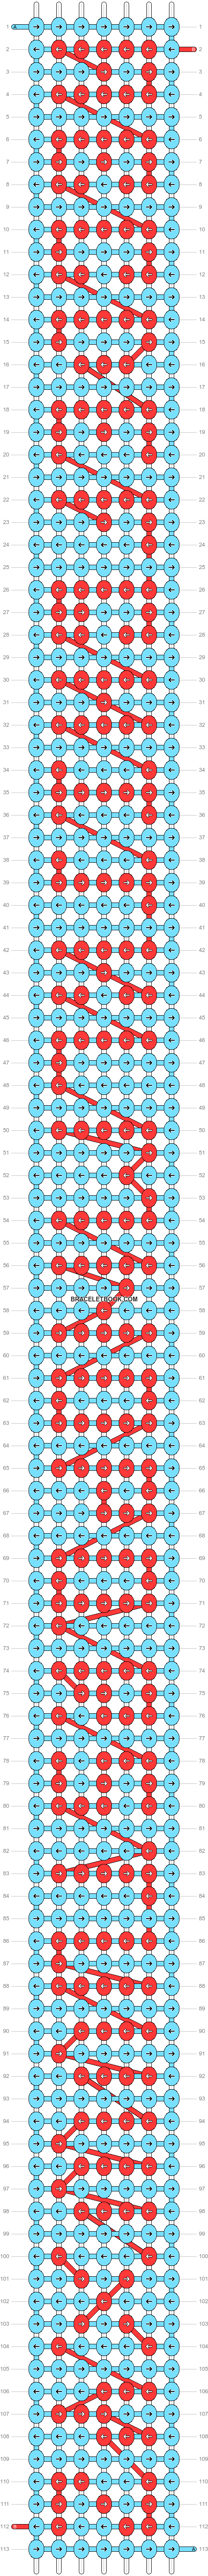 Alpha pattern #46779 variation #70272 pattern